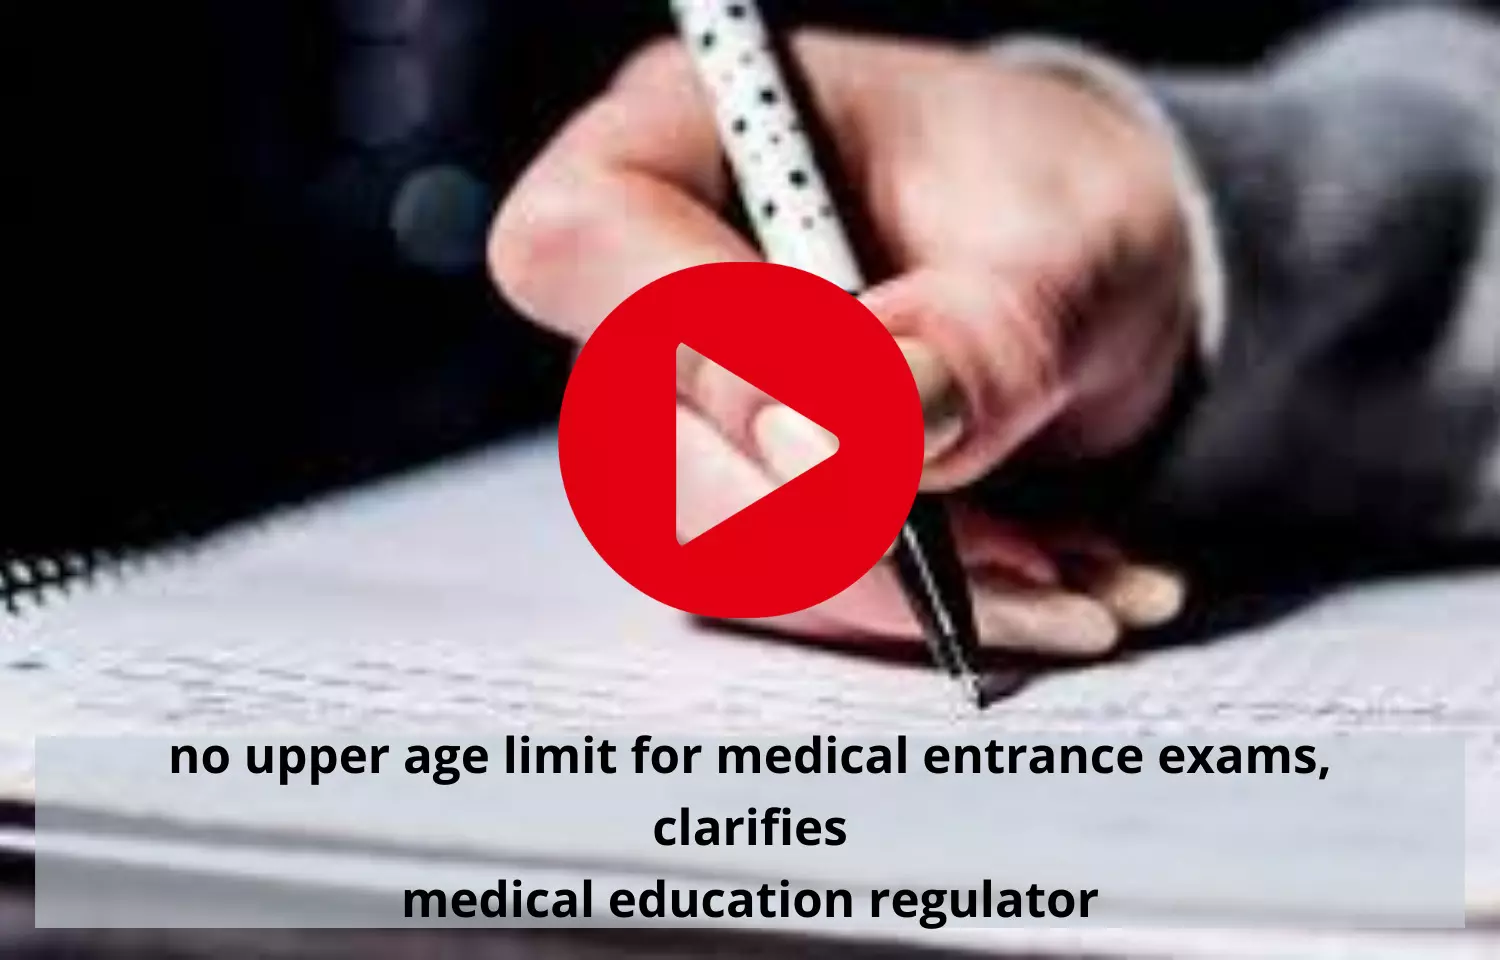 No upper age limit for medical entrance exams, clarifies medical education regulator